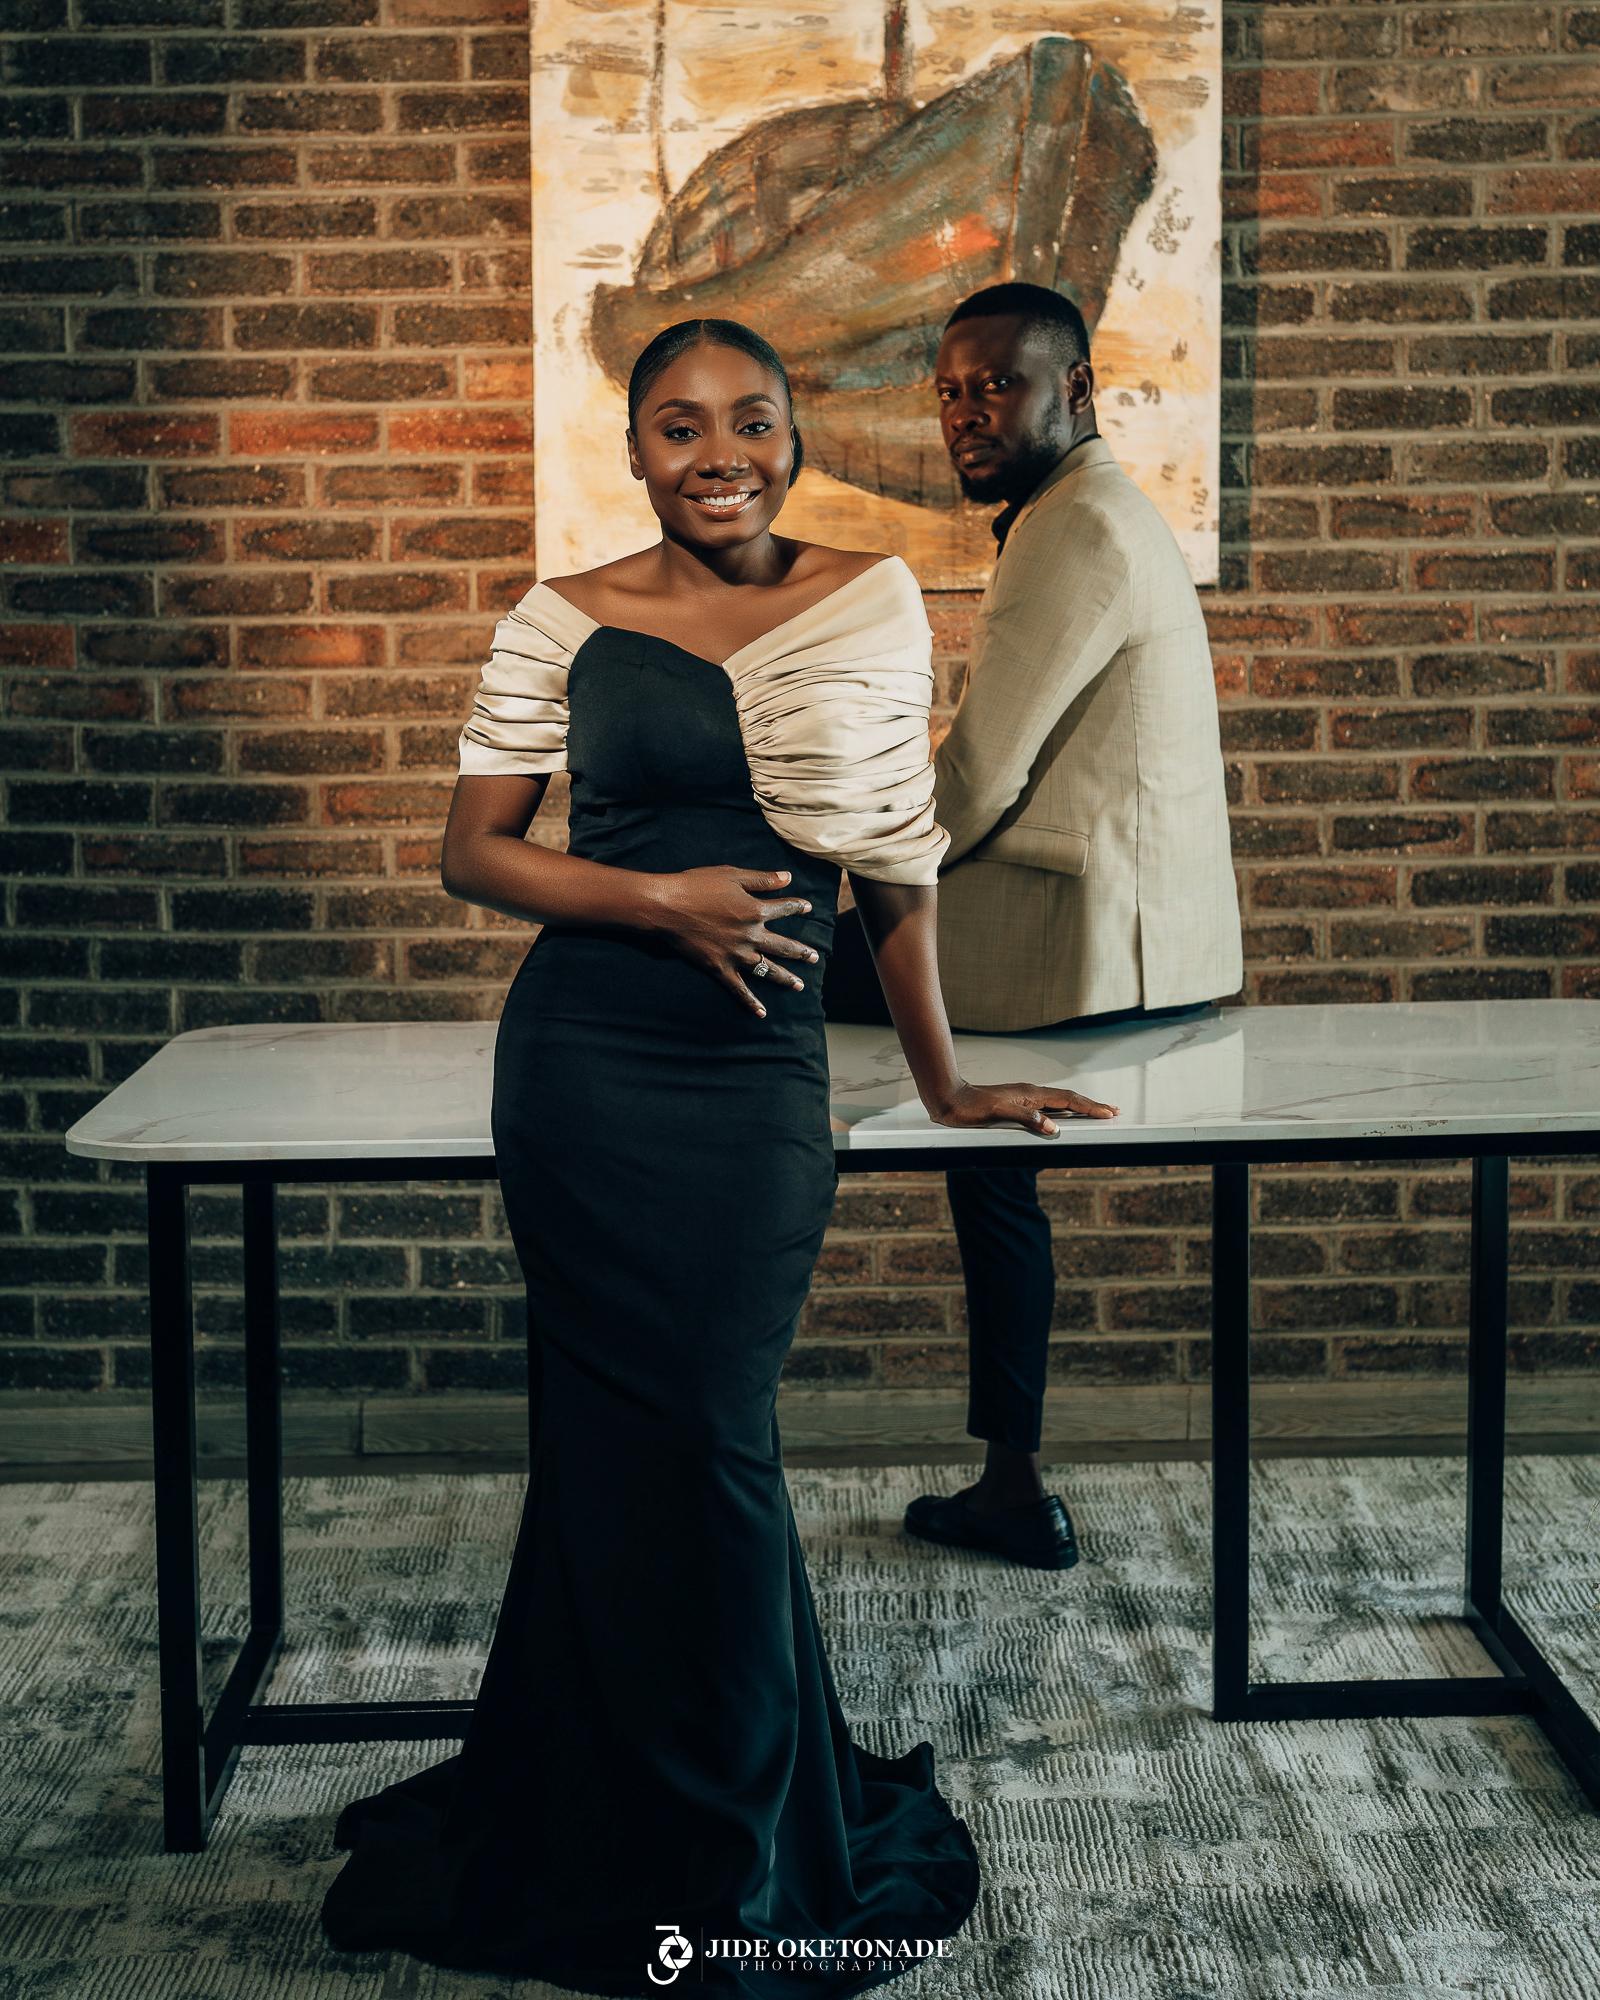 The Wedding Website of Precious Amadi and Chiemerie Ekeneme